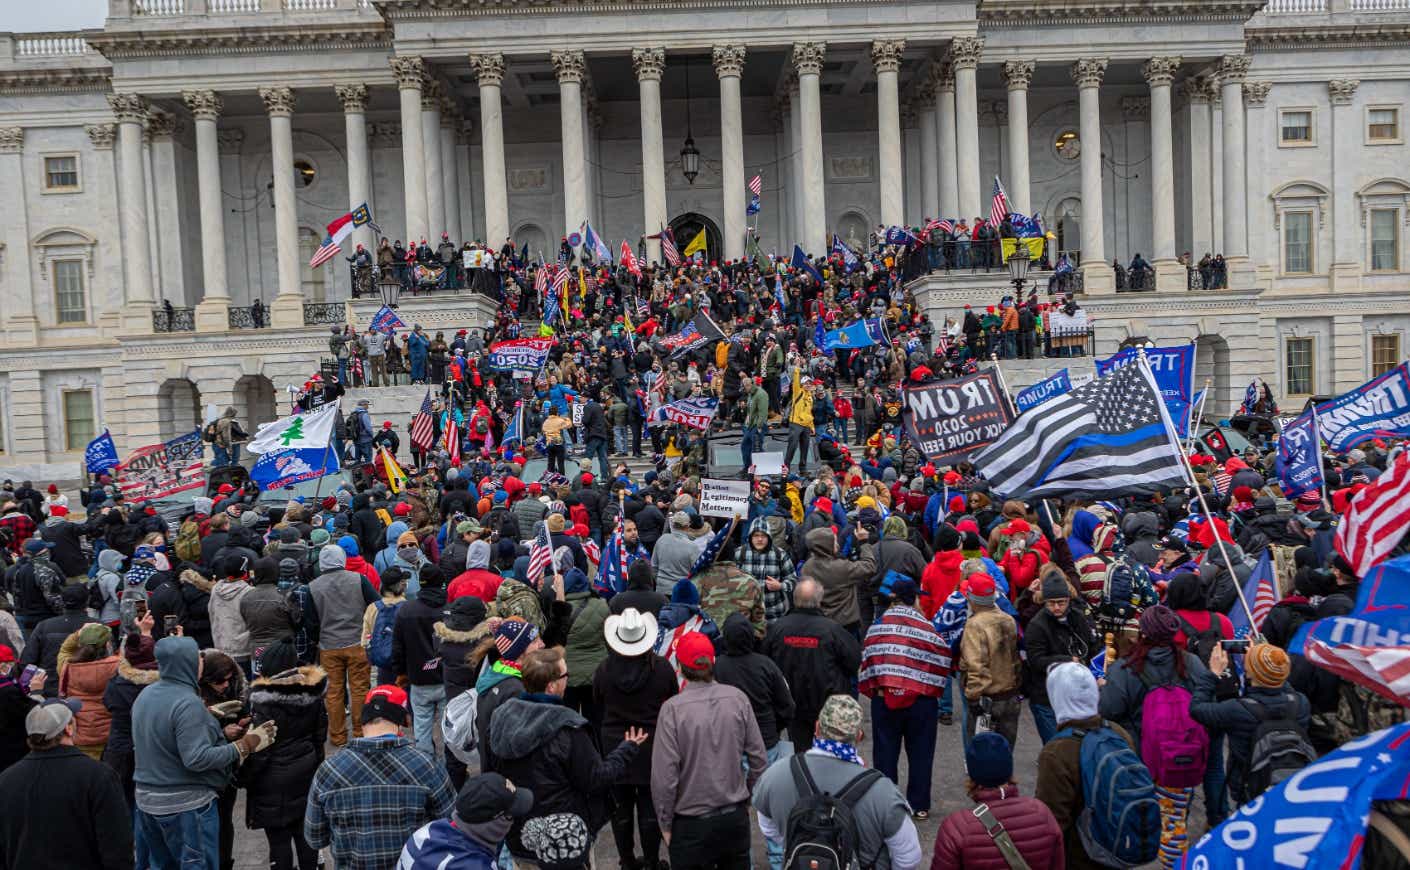 A mob descends on the U.S. Capitol building